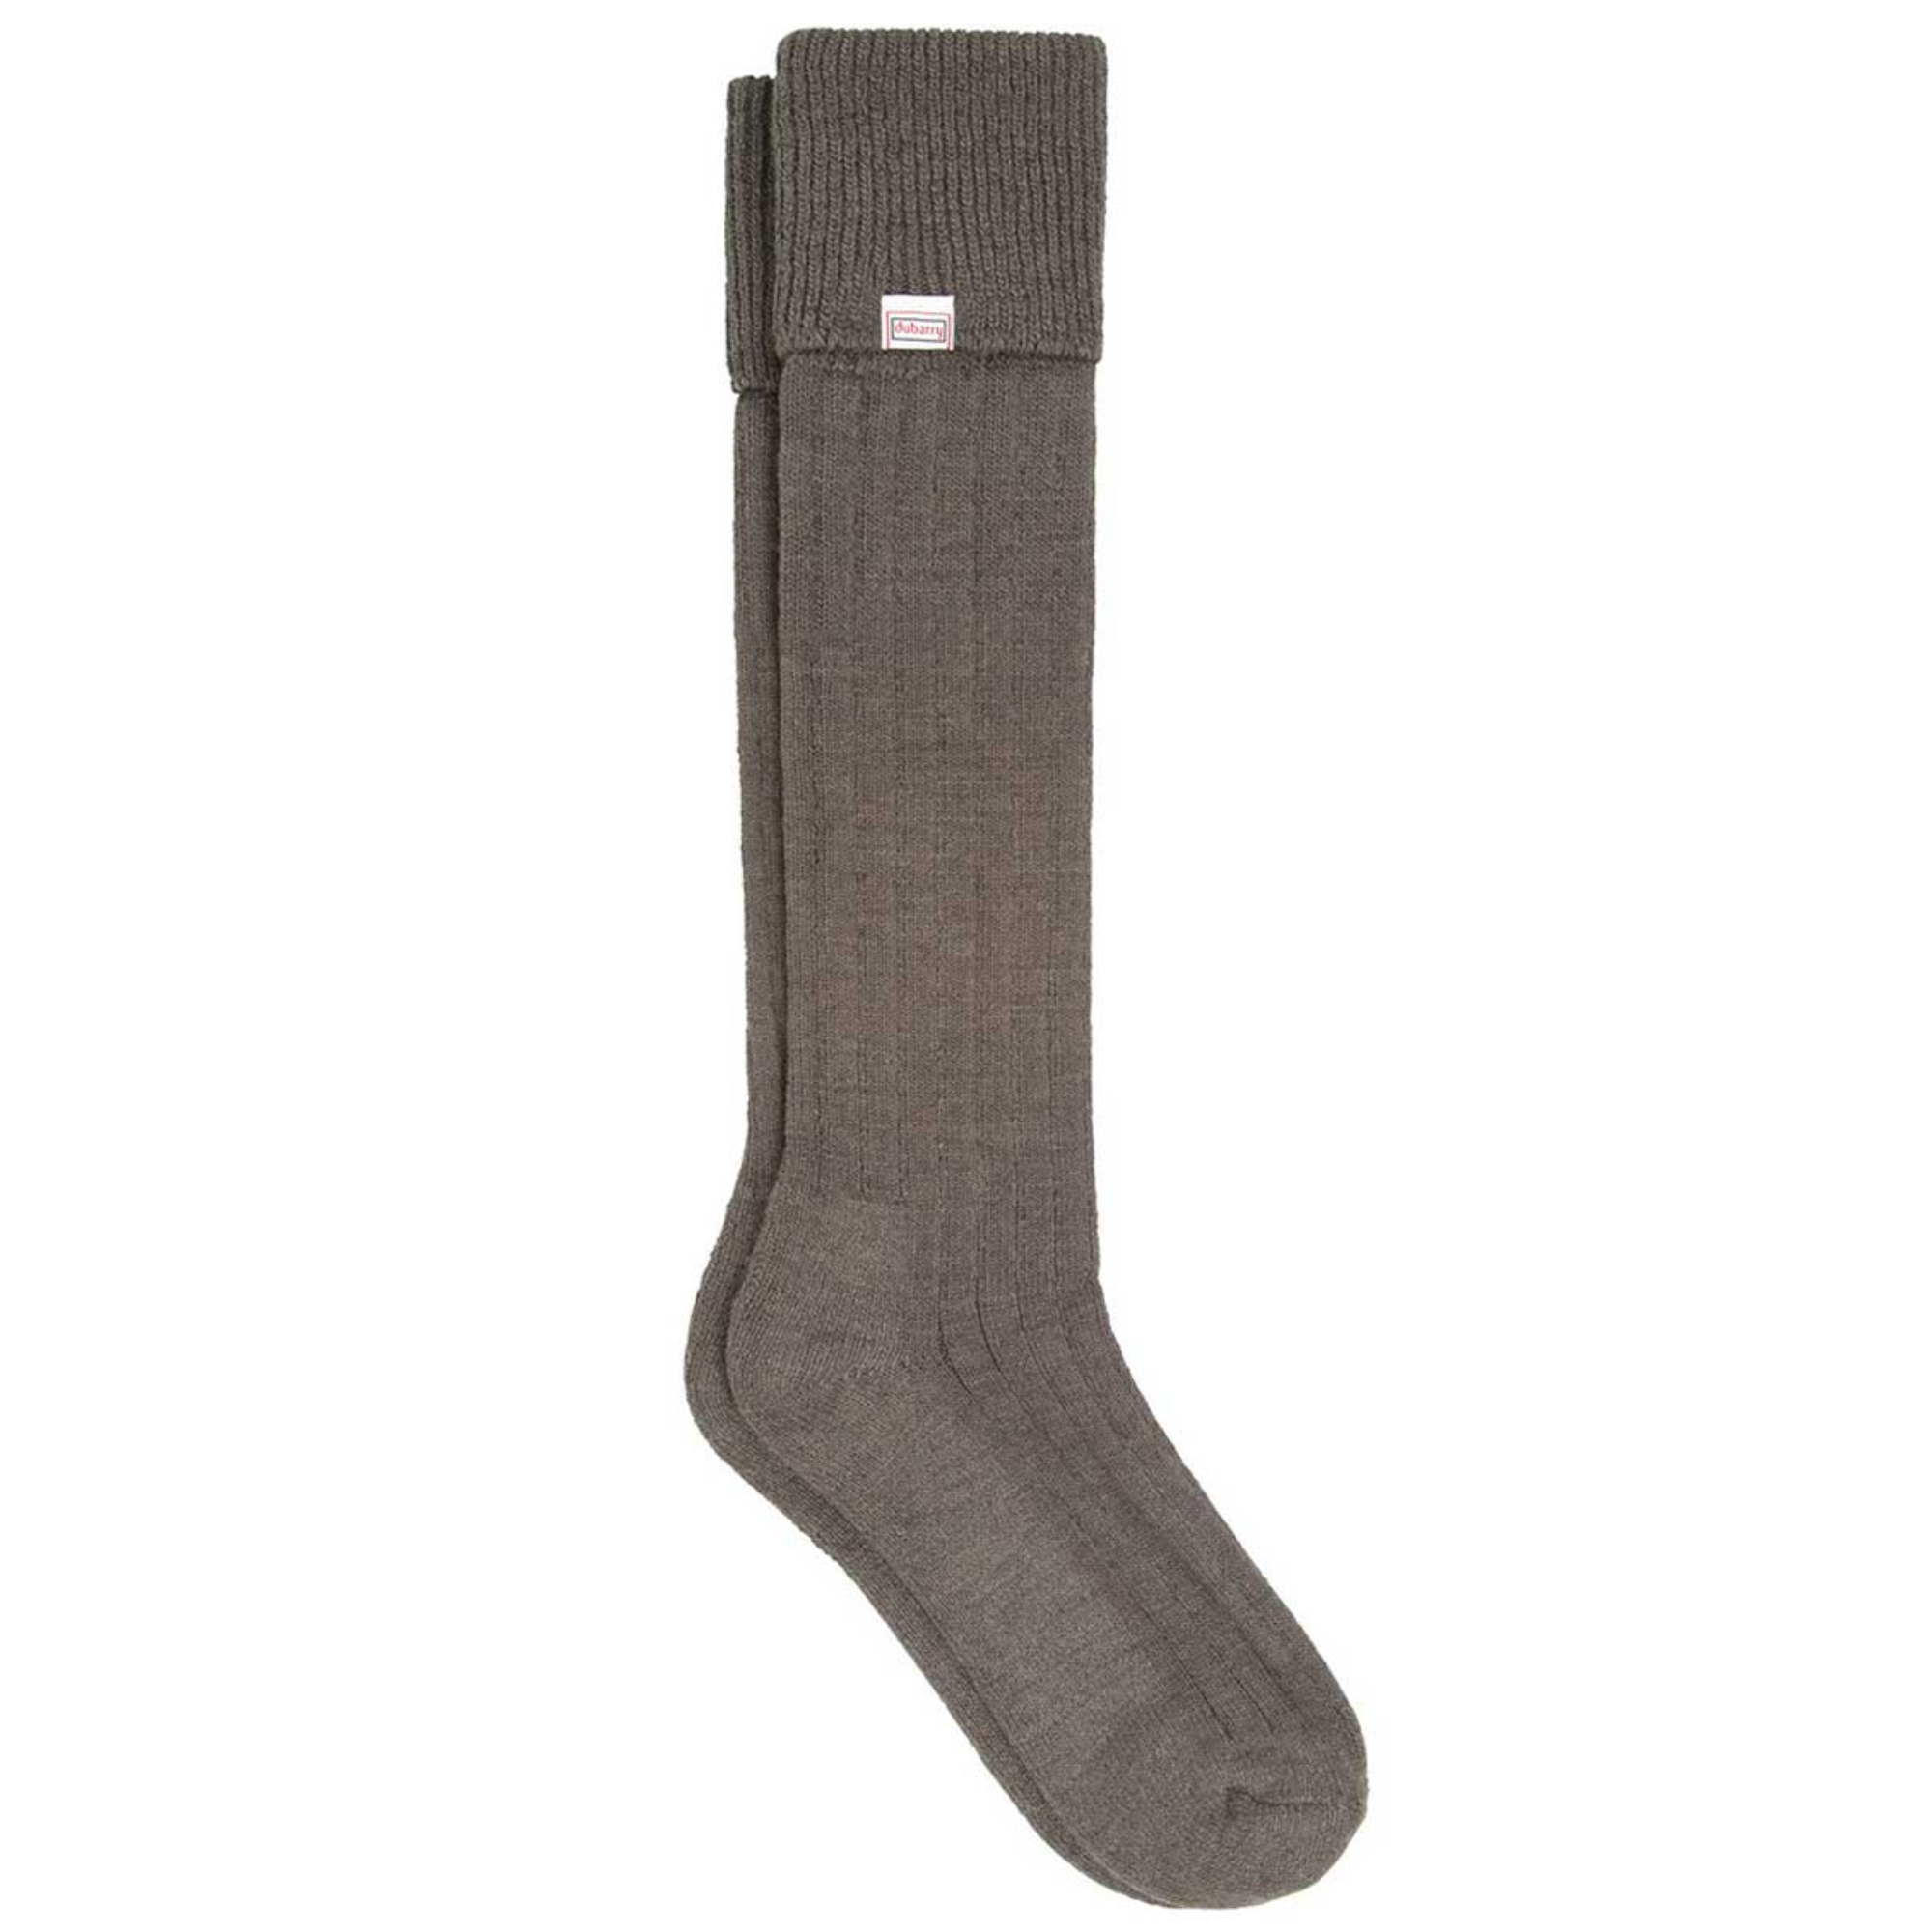 Dubarry Alpaca socks long 4133 09 Olive